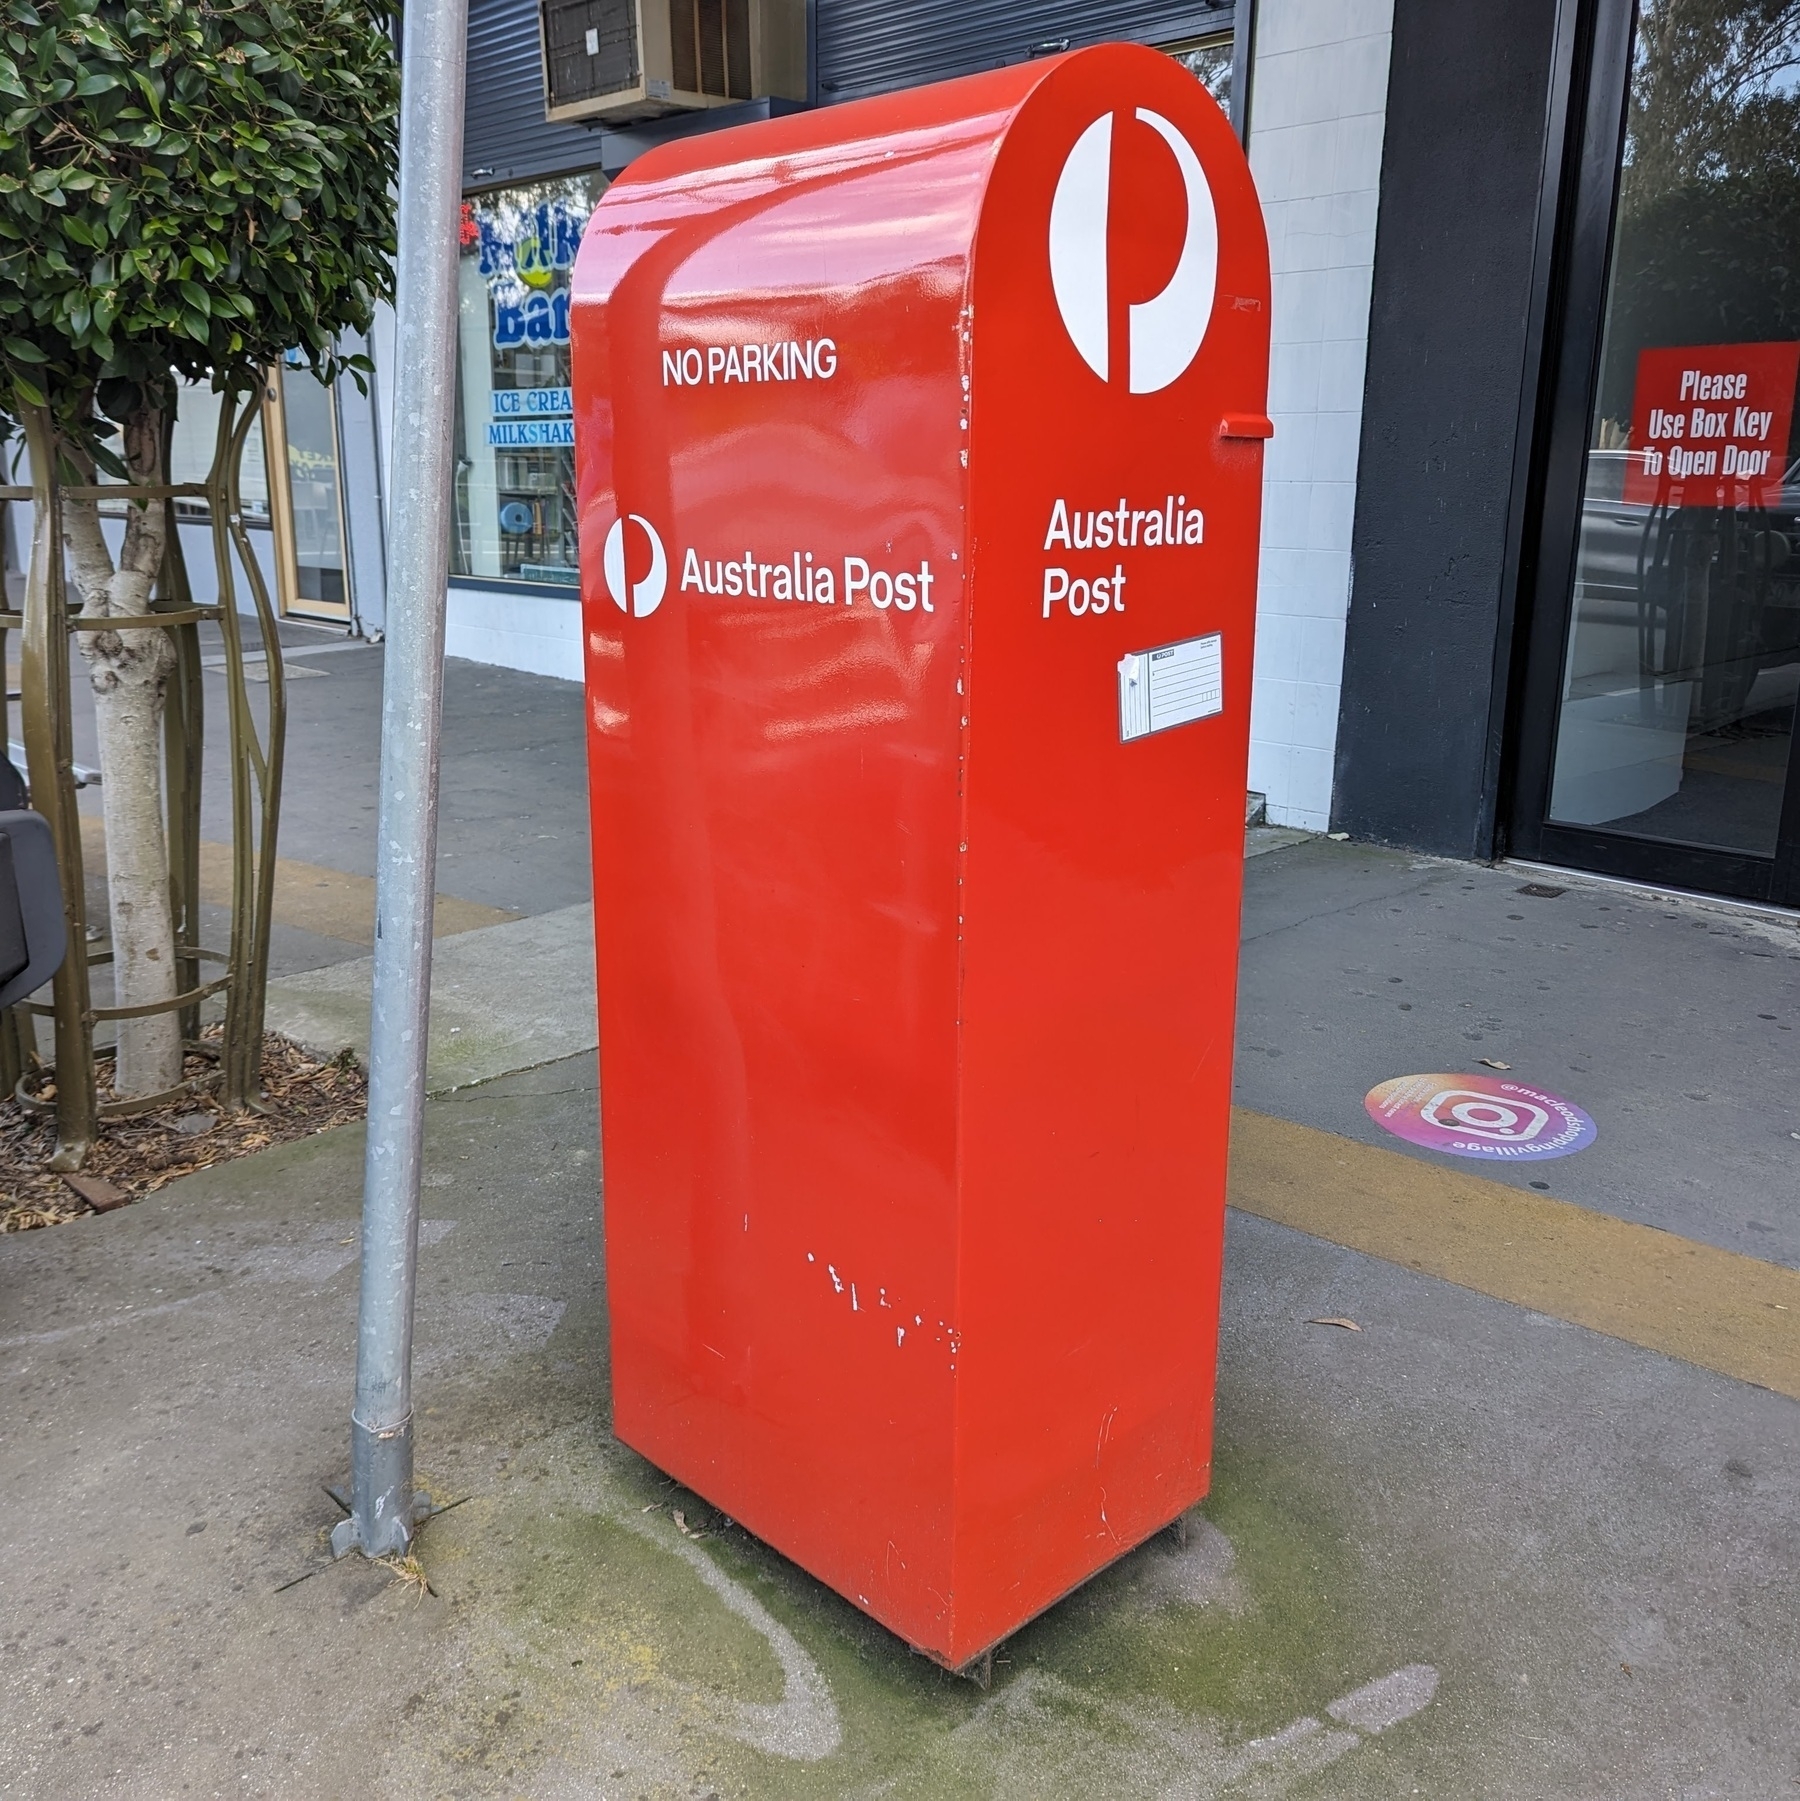 A red Australian Post mailbox